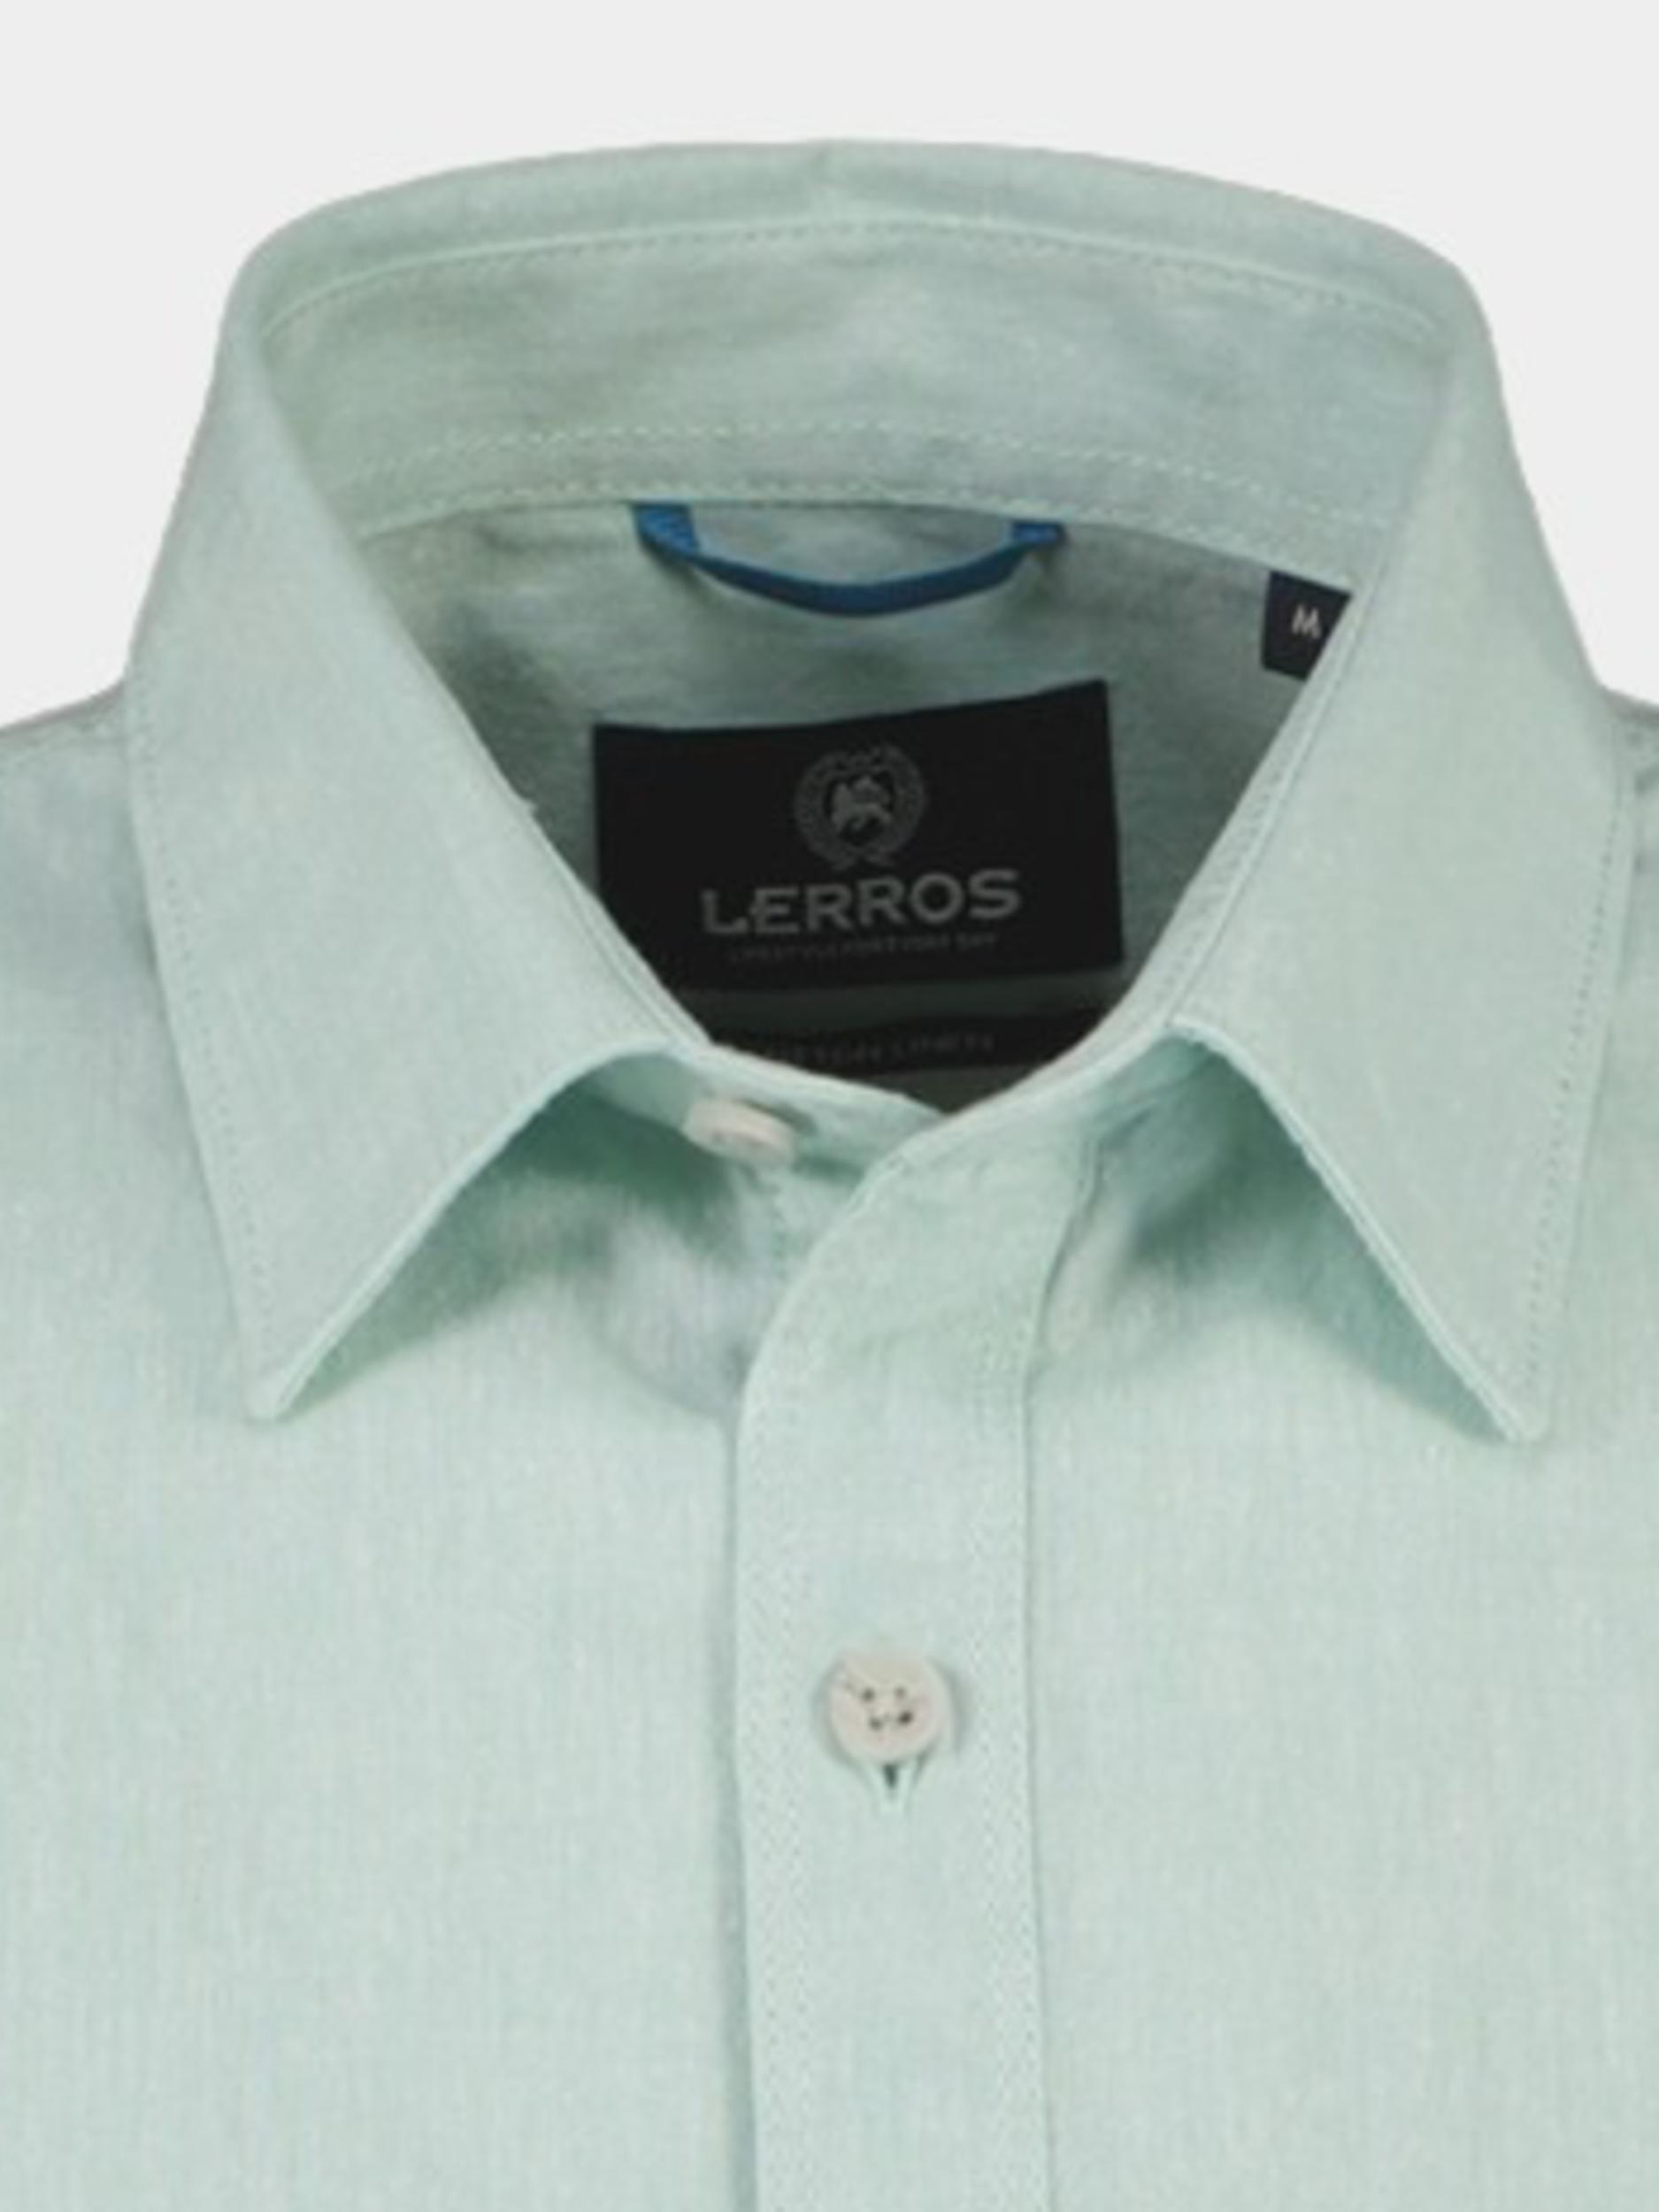 Lerros Casual hemd korte mouw Groen HEMD 1/2 ARM 2442010/622 COASTAL SEA BLU